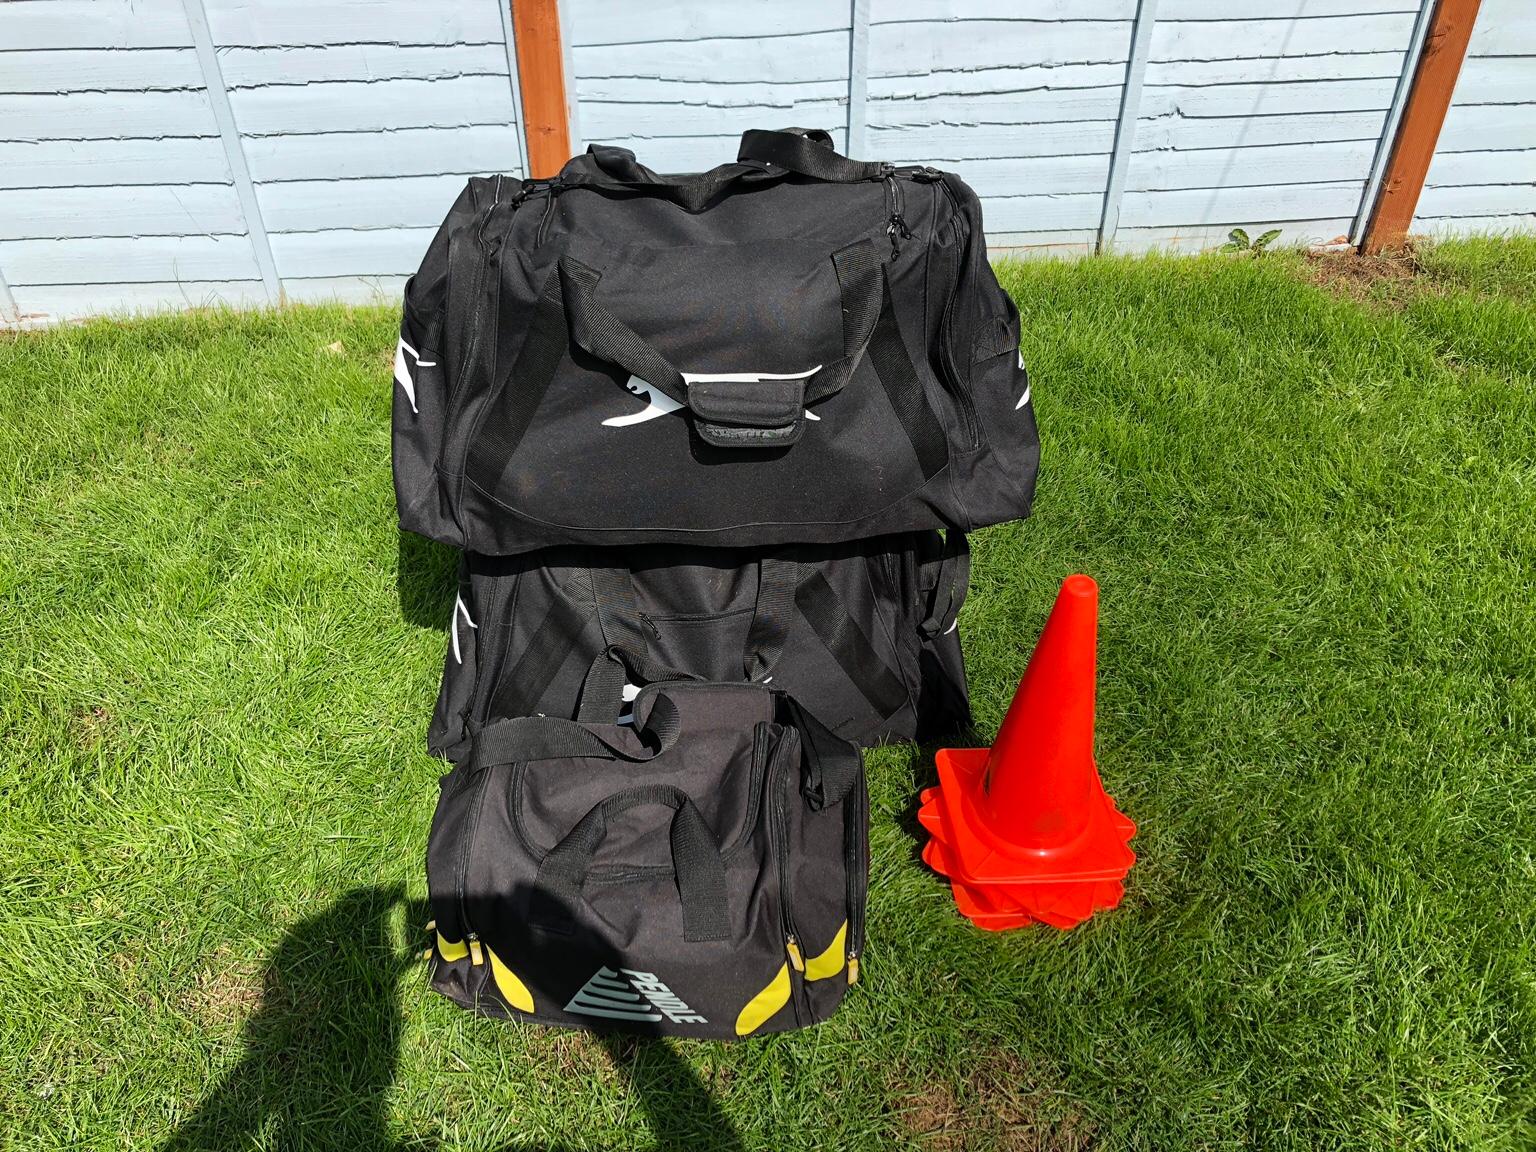 19PCS Swift Ladder And Tapered Bag Football Training Equipment UK SELLER Deliver 